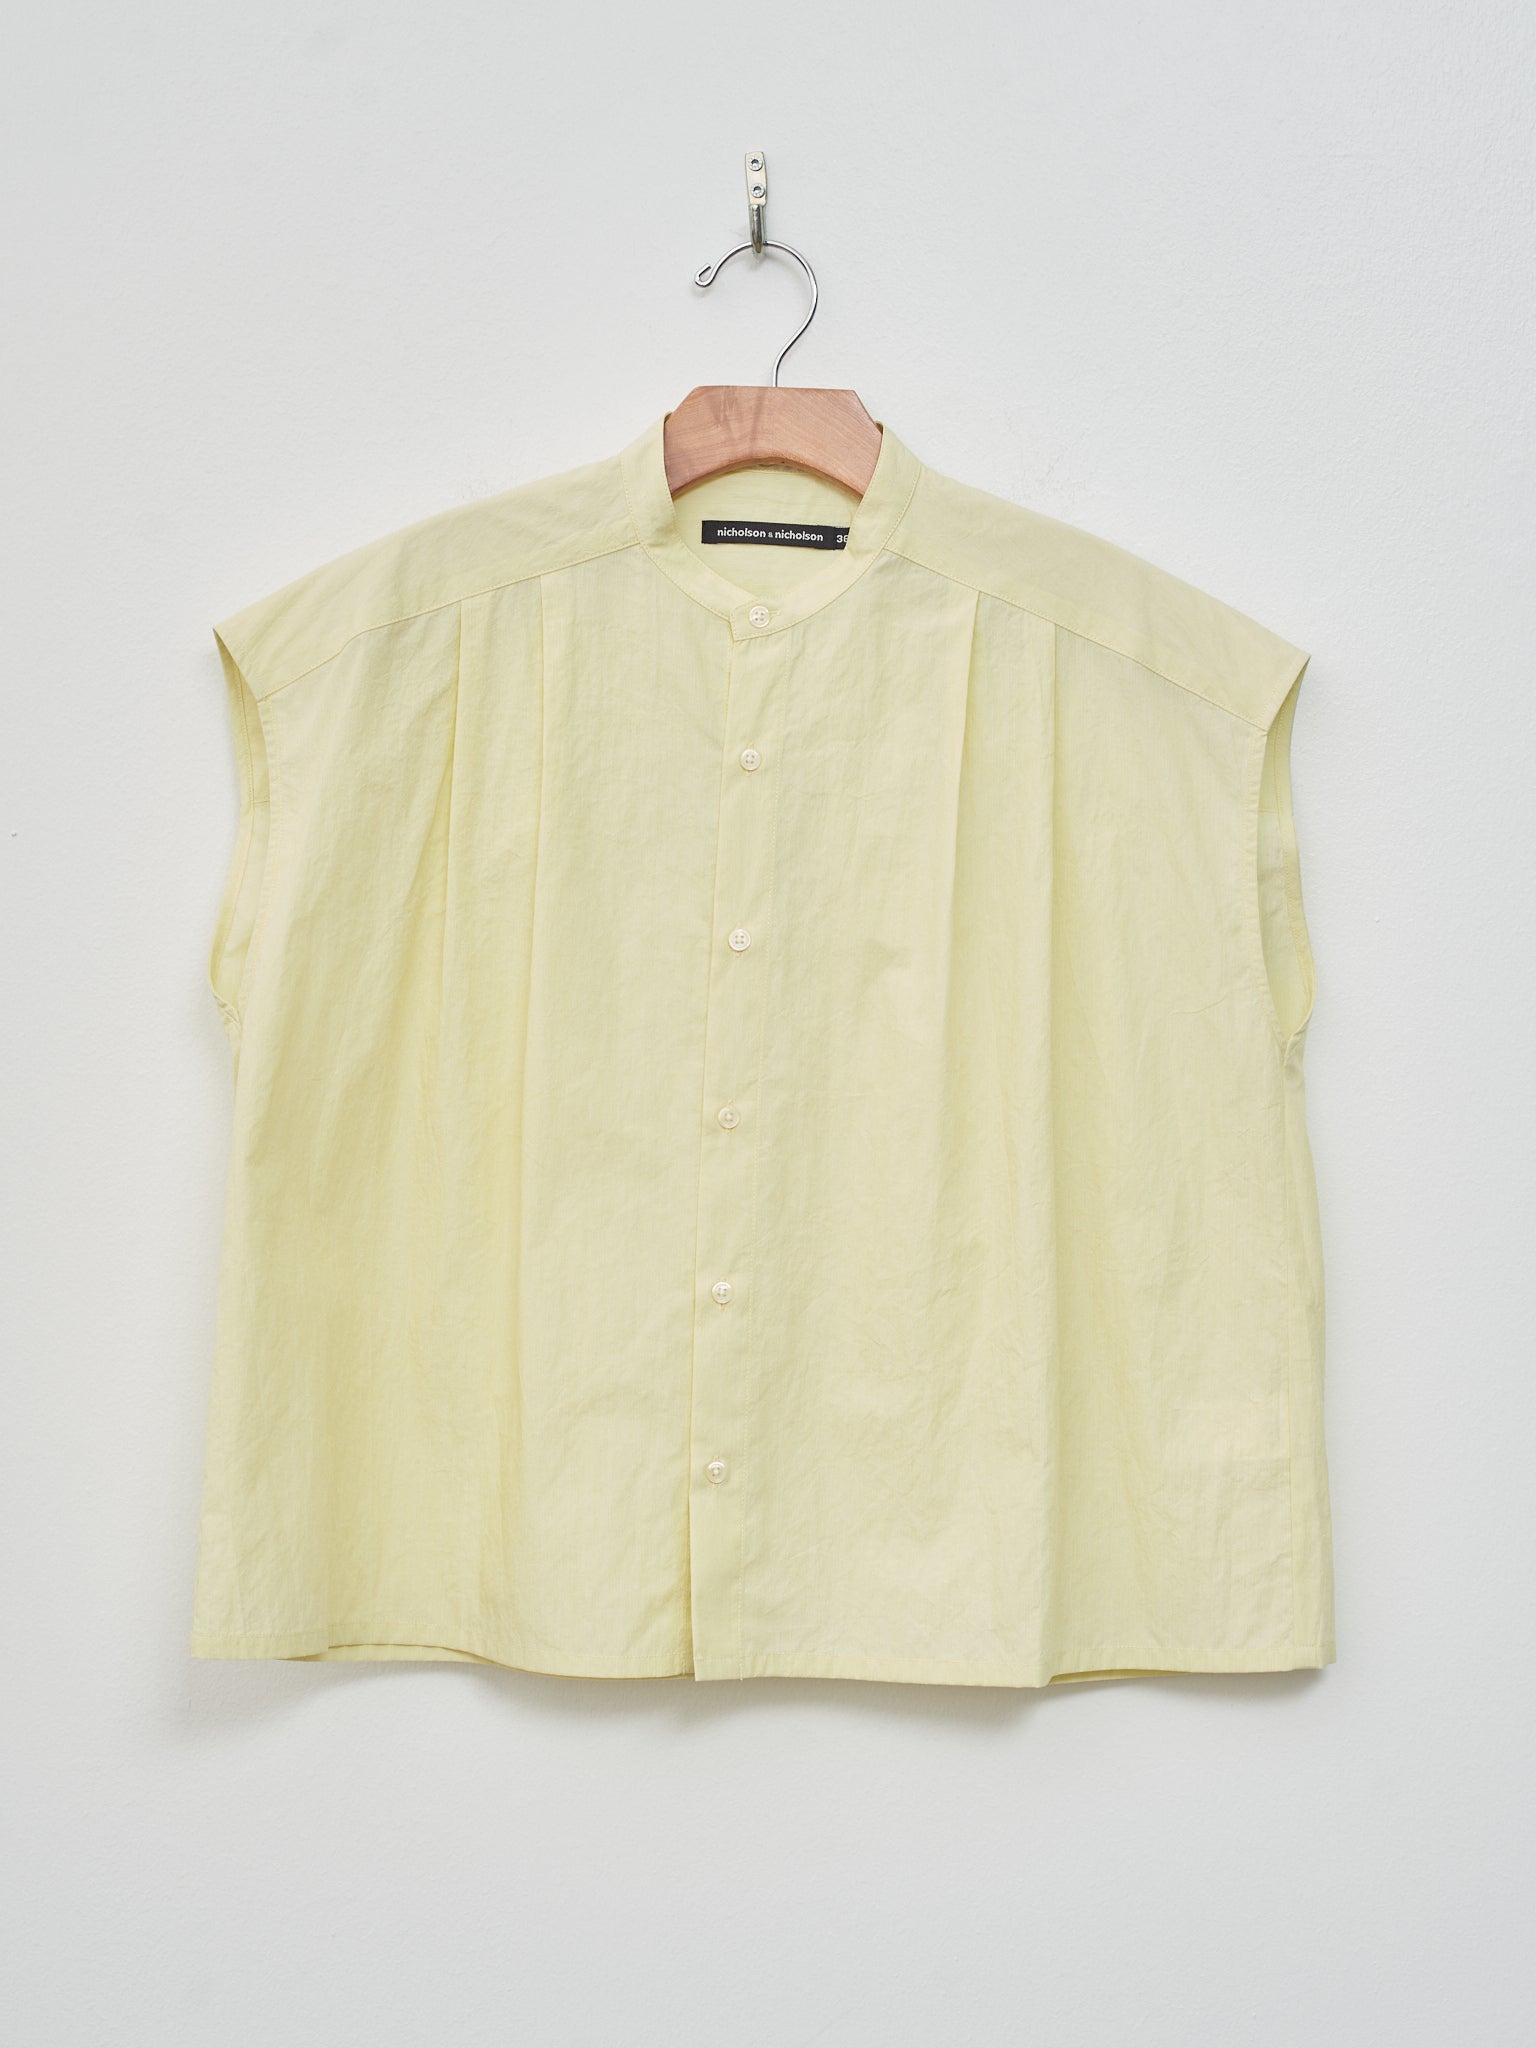 Namu Shop - Nicholson & Nicholson Smile Shirt - Yellow